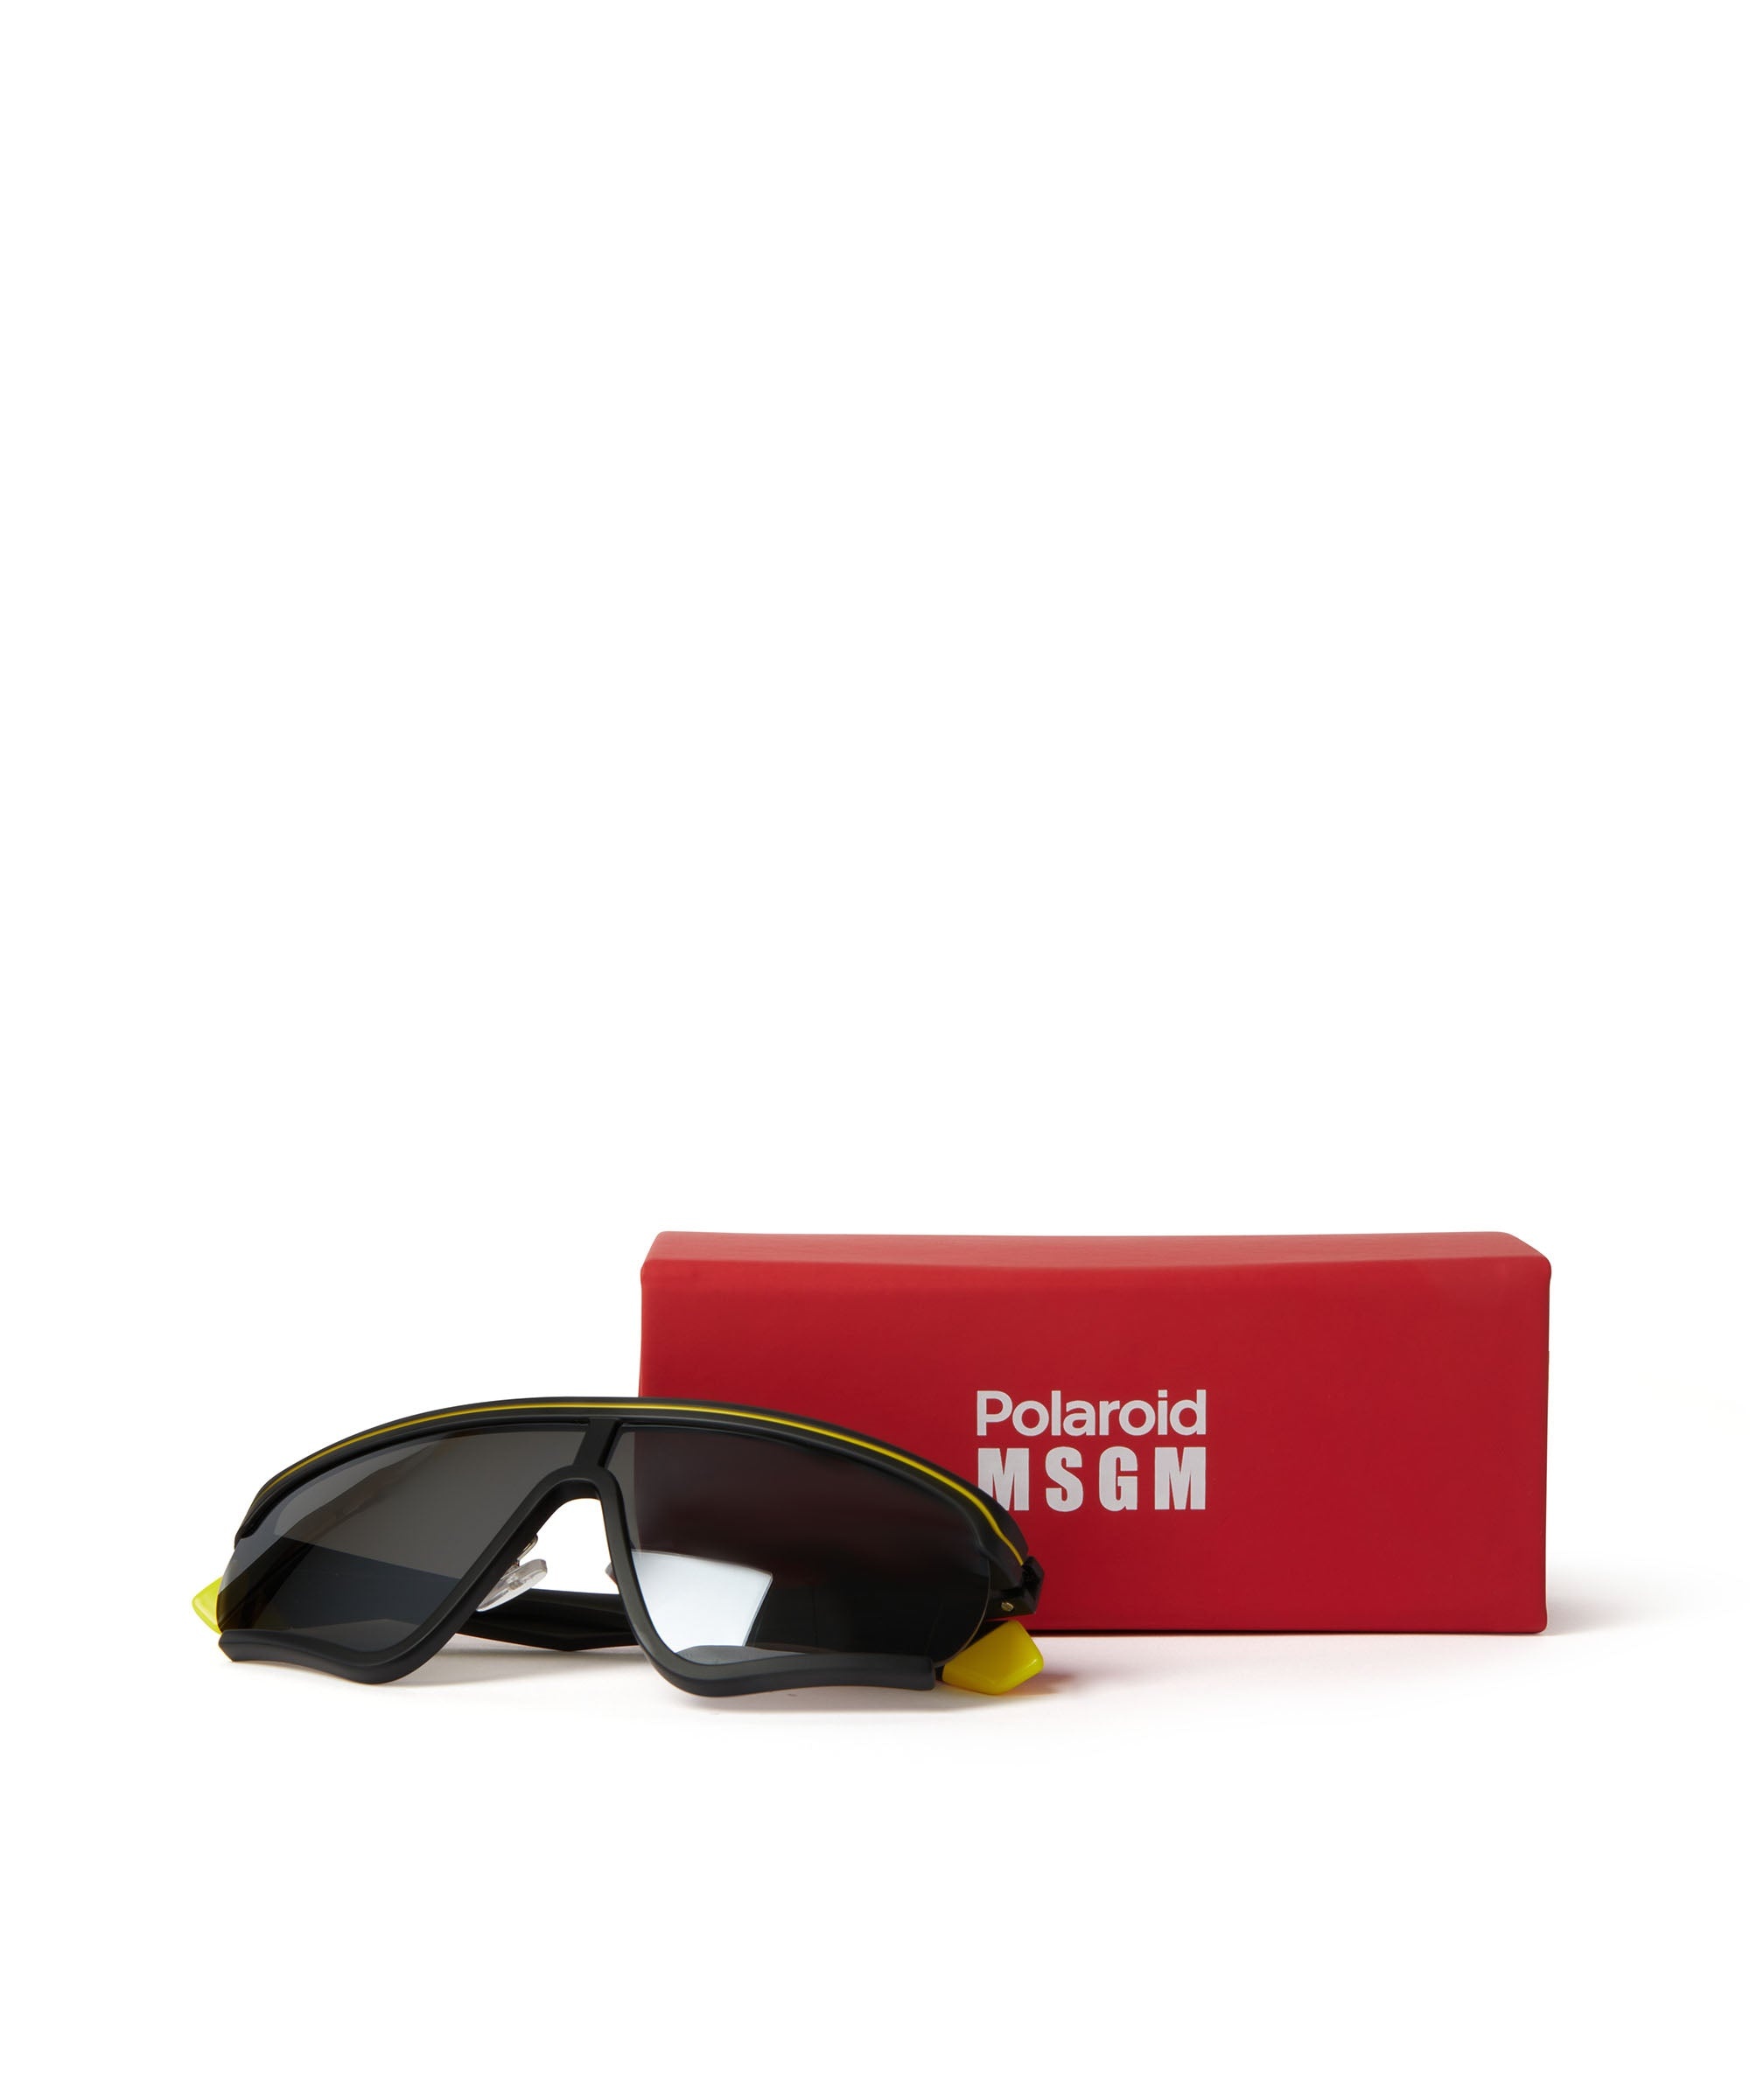 Sunglasses in Polaroid polycarbonate for MSGM - 2